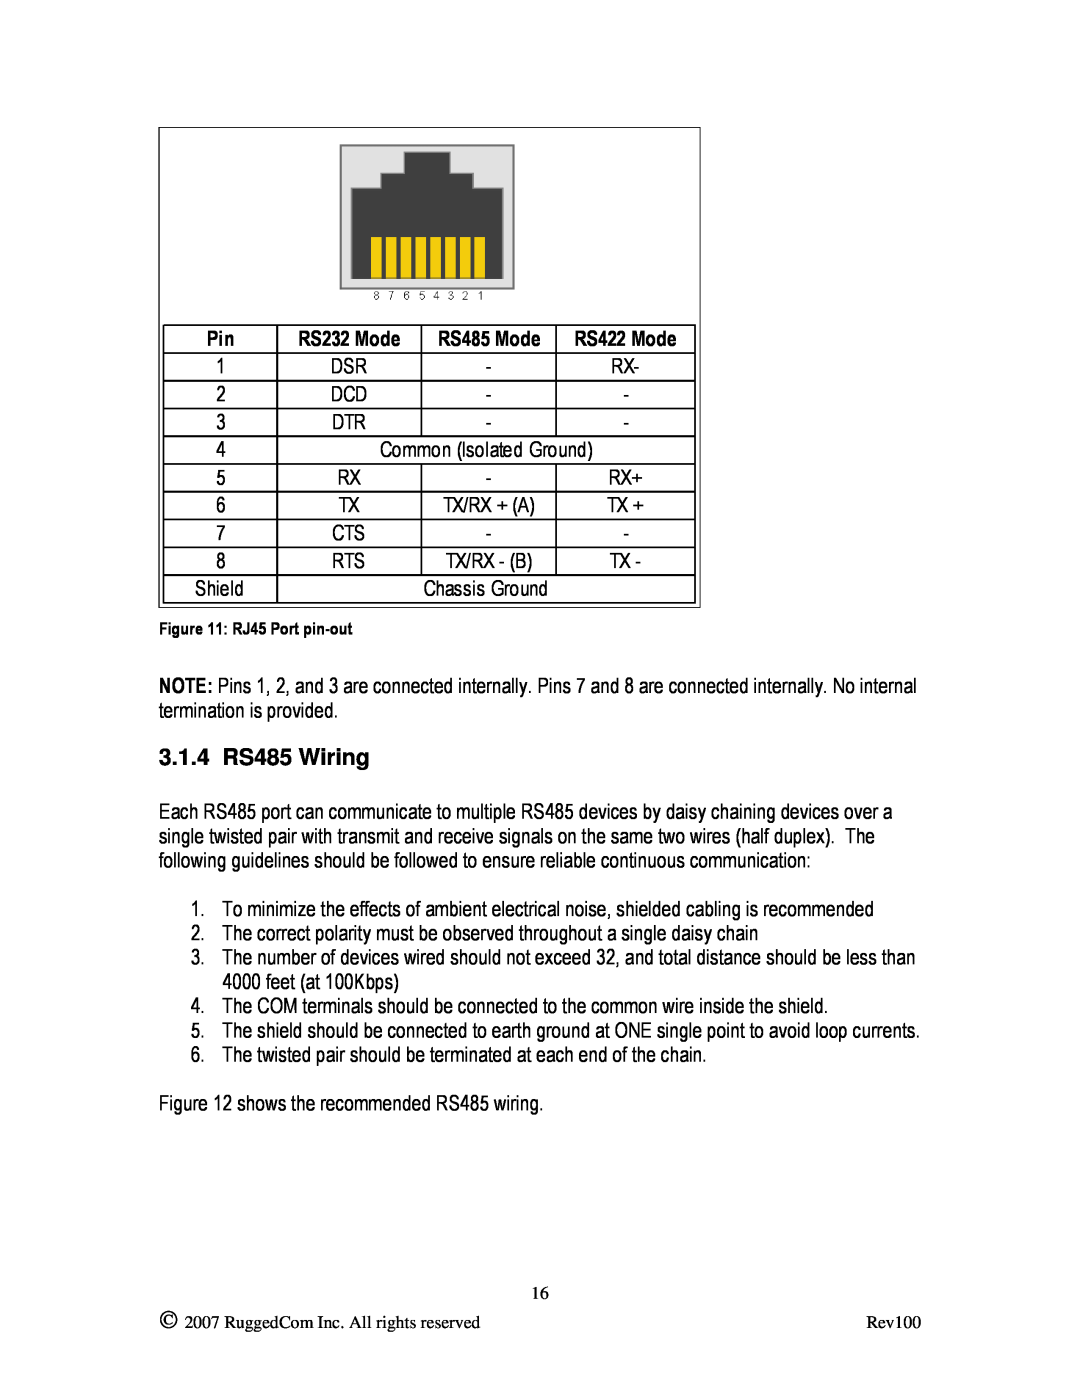 RuggedCom RS910W manual 3.1.4 RS485 Wiring 